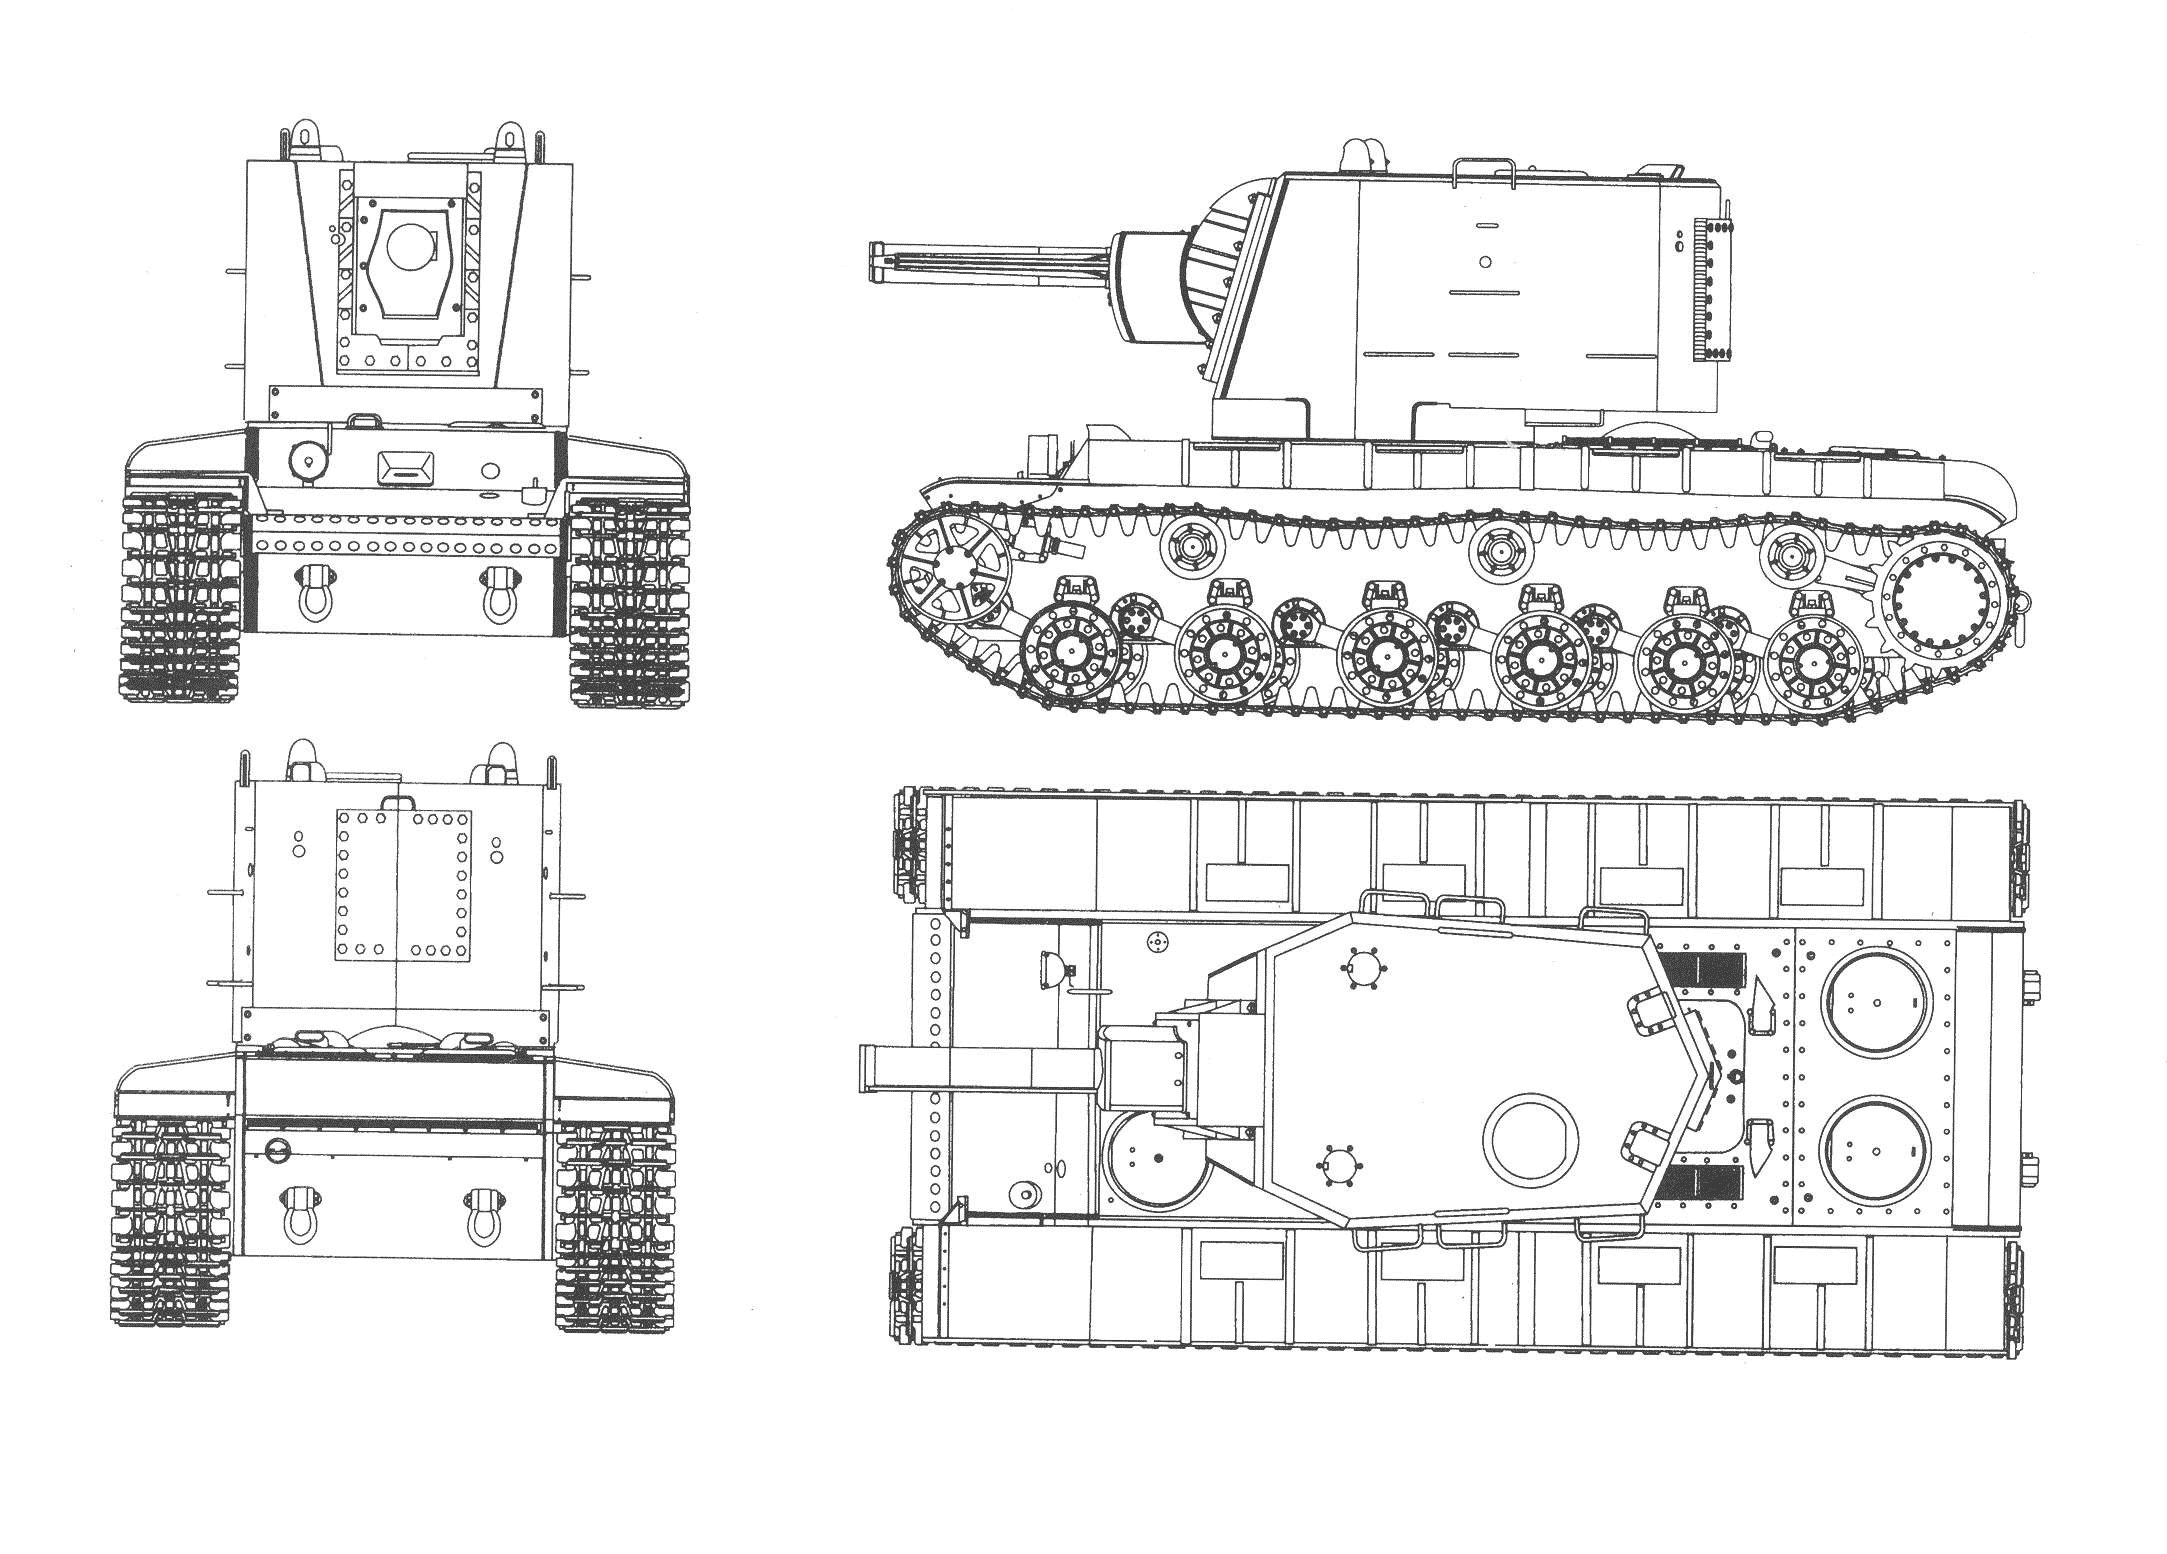 KV-2 blueprint